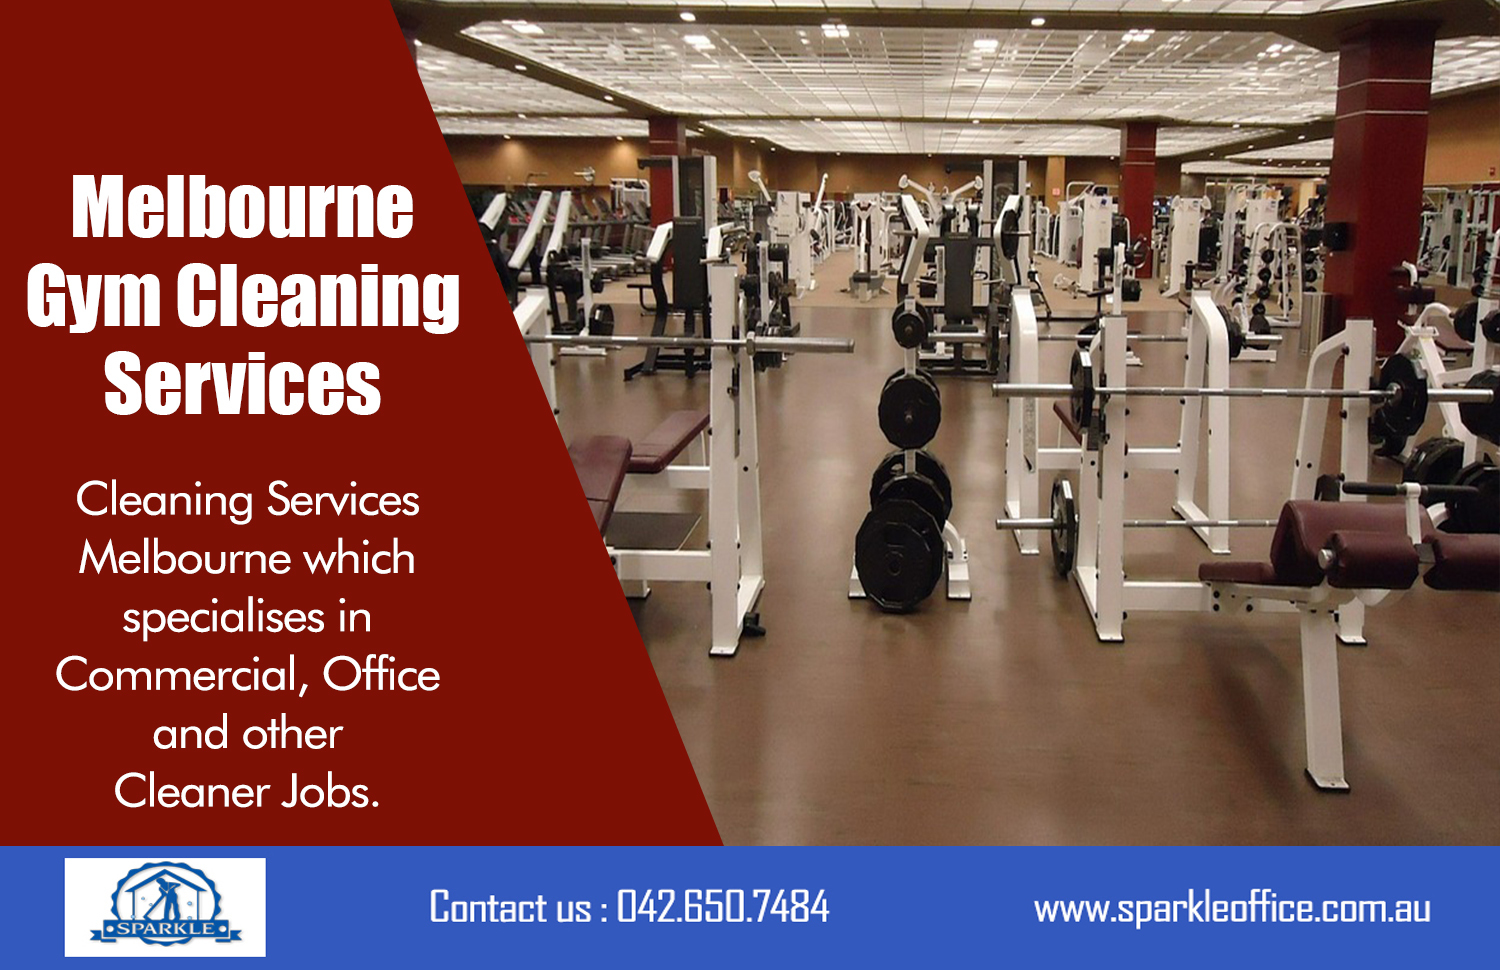 Melbourne Gym Cleaning Services| Call Us - 042 650 7484  | sparkleoffice.com.au